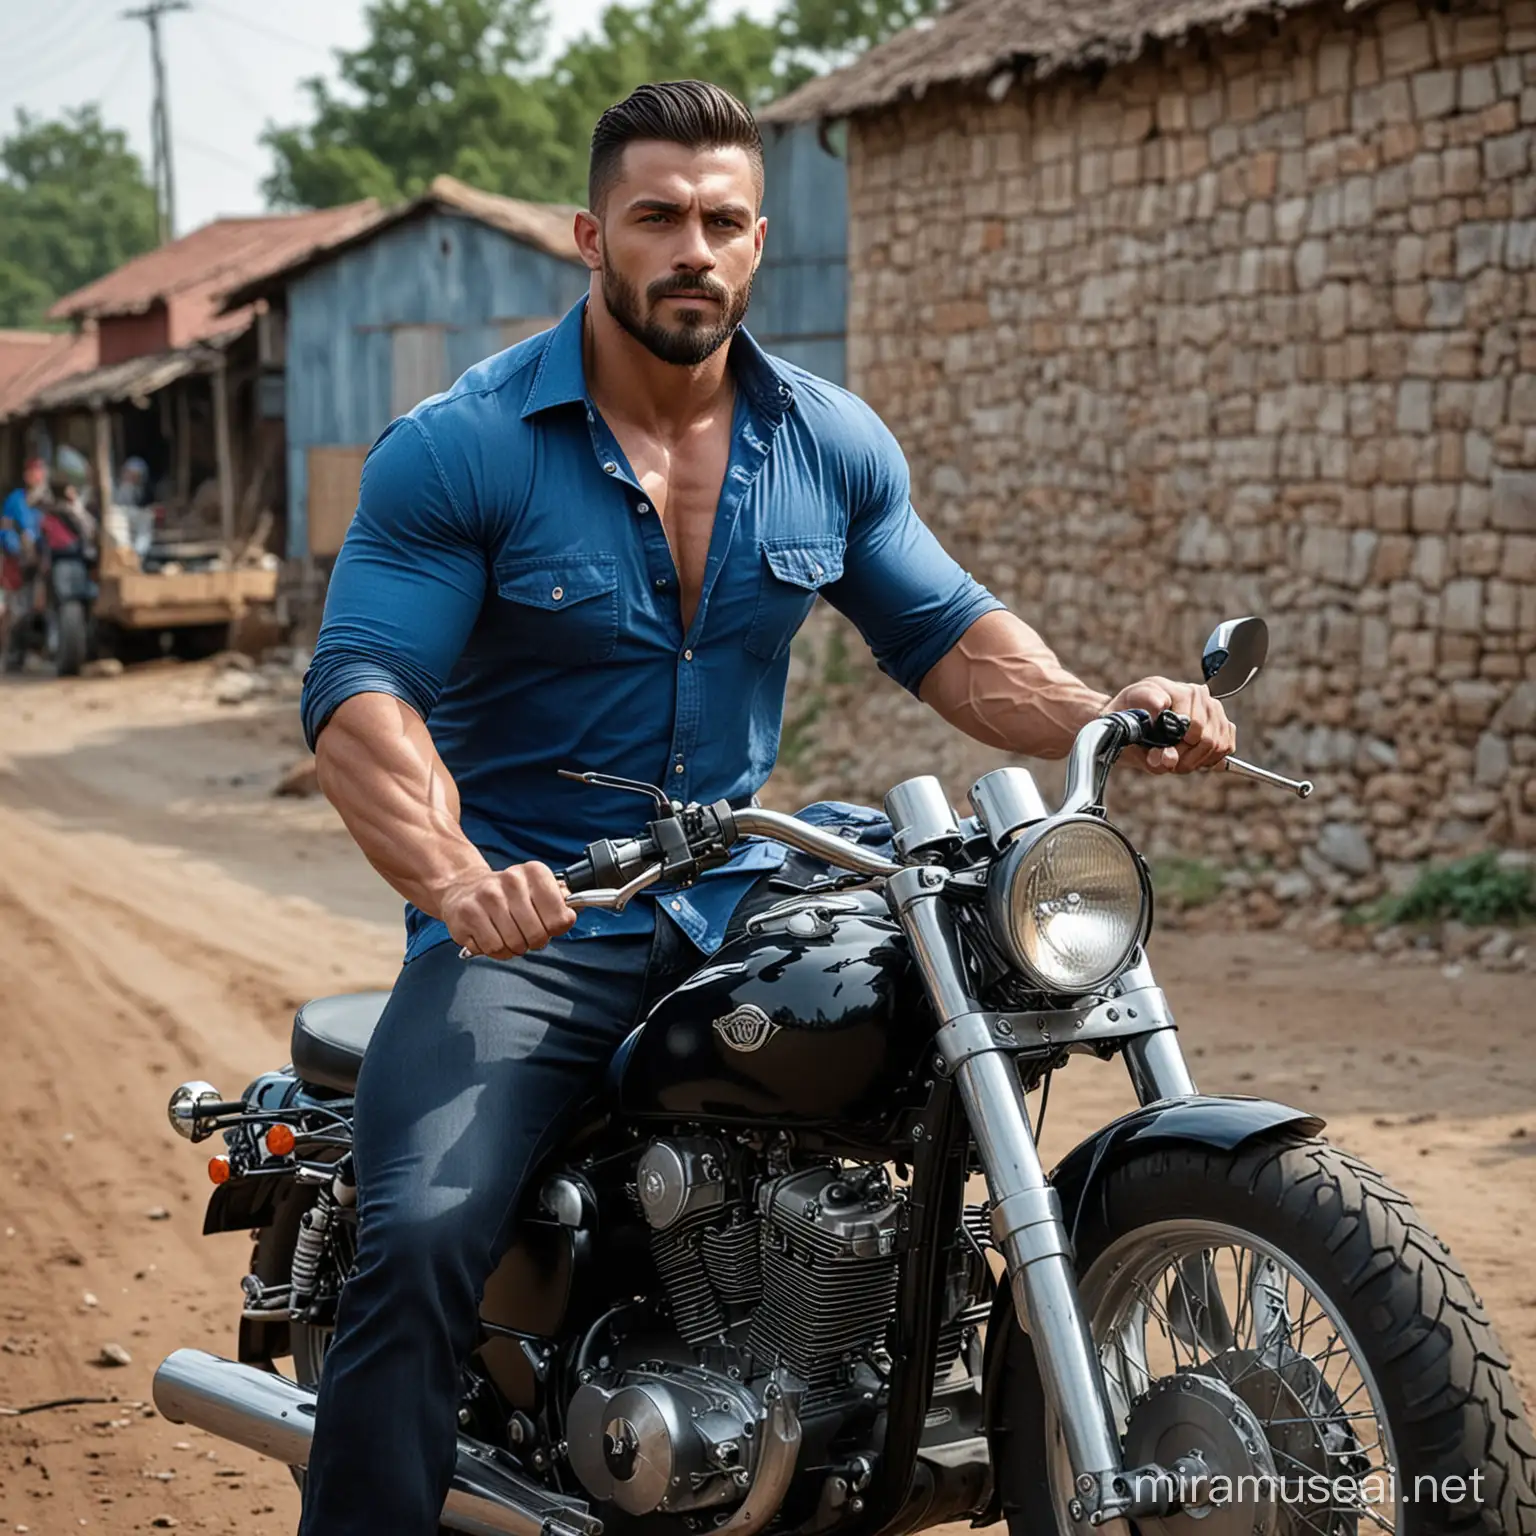 Big giant muscular build men wearing unbuttoned jet black and blue shirt at village on heavy motor bike